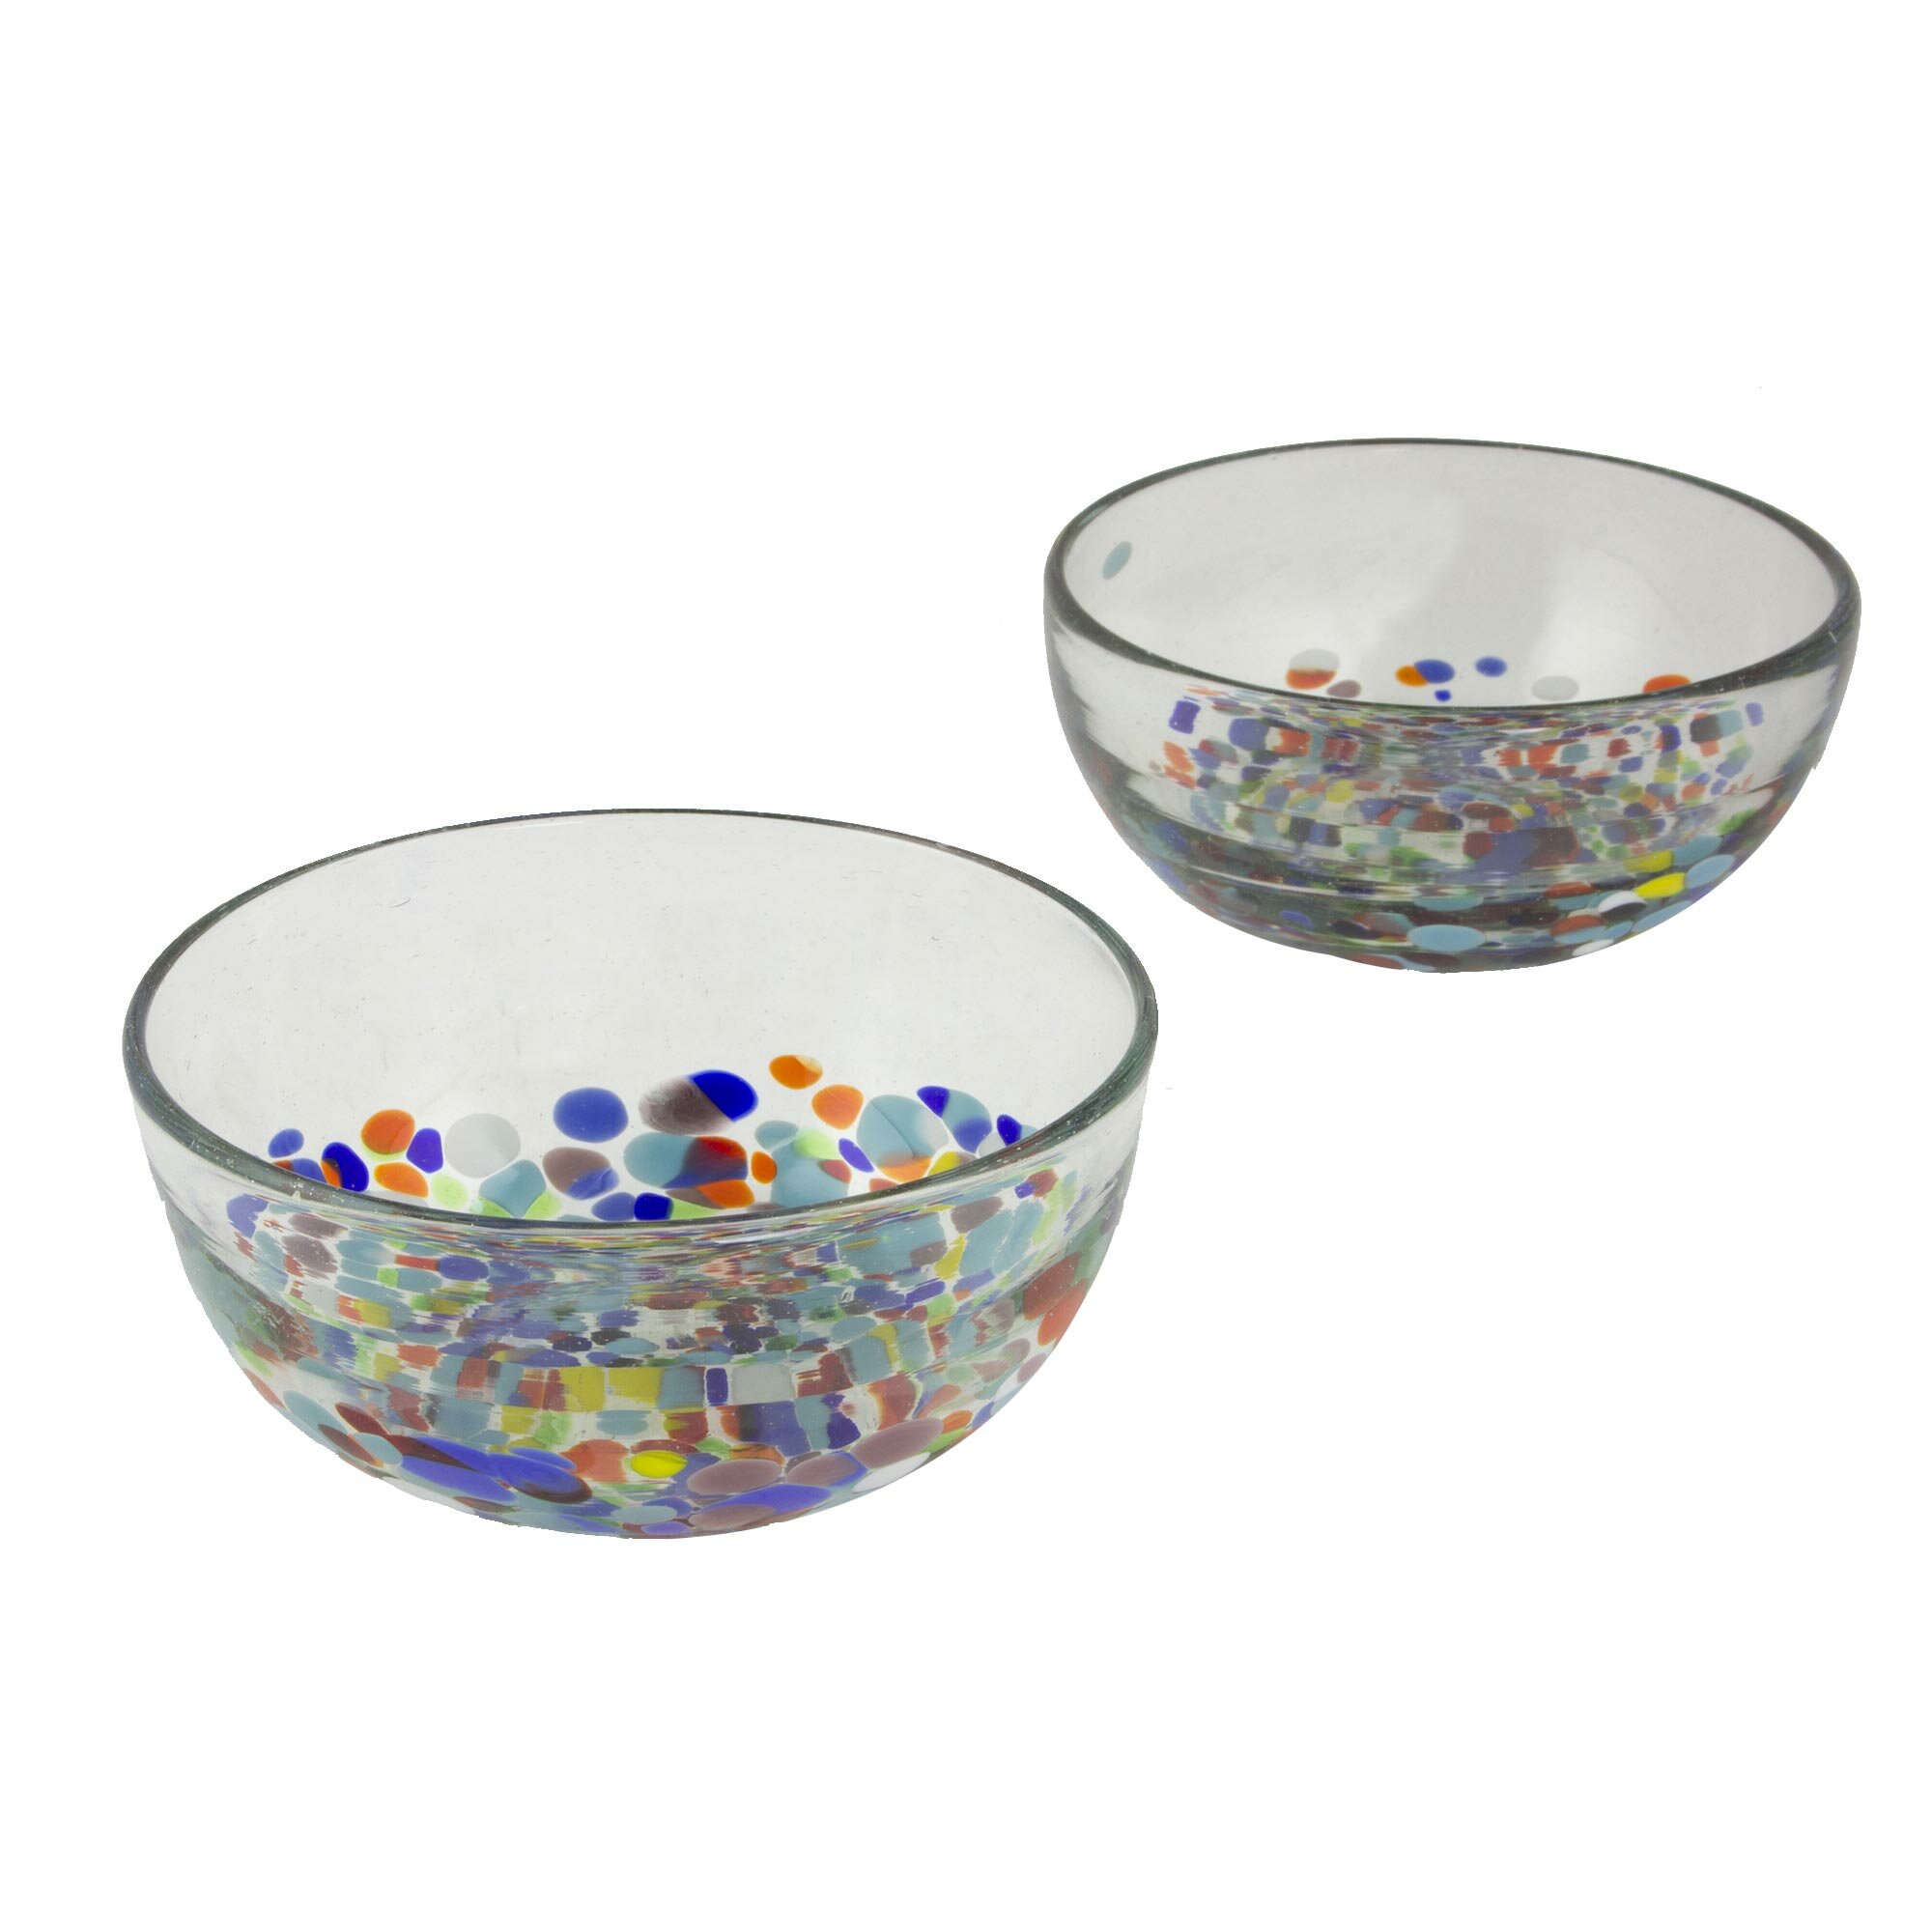 decorative glass bowls